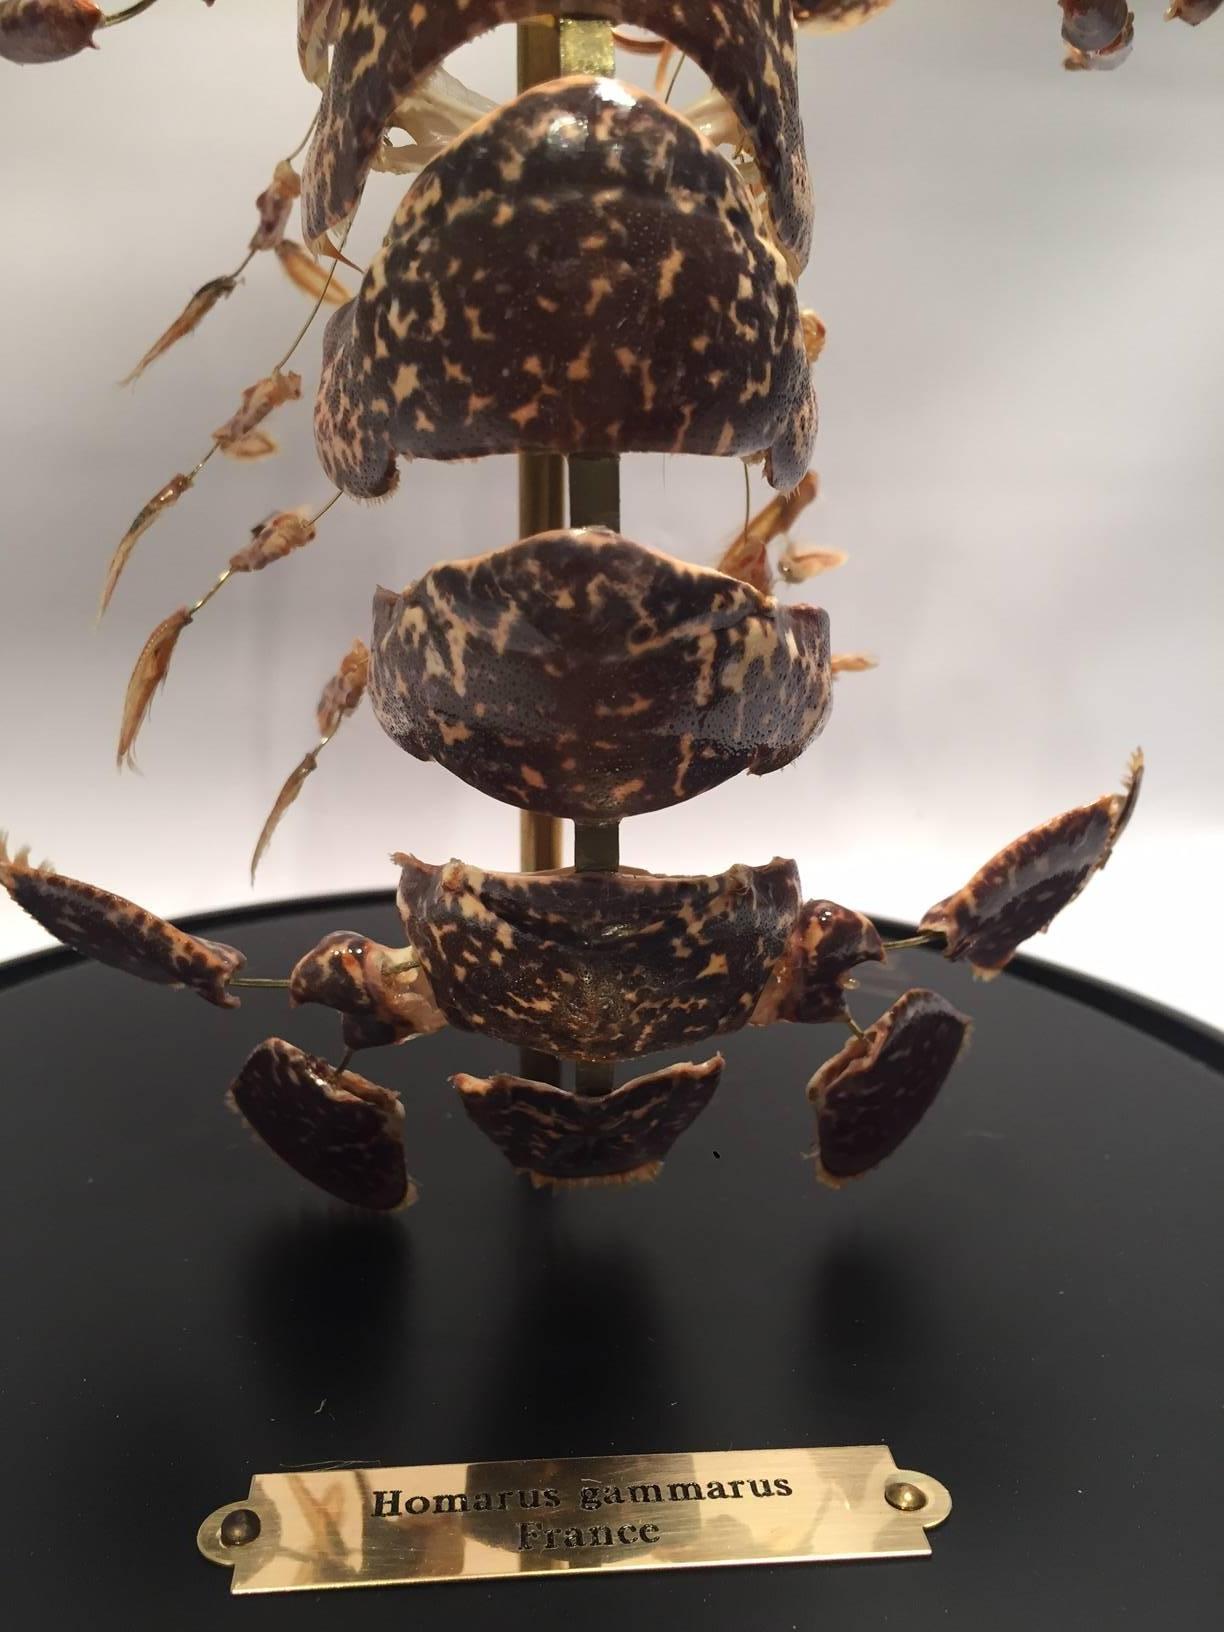 Wood Deconstructed Clawed Lobster 'Homarus Gammarus'